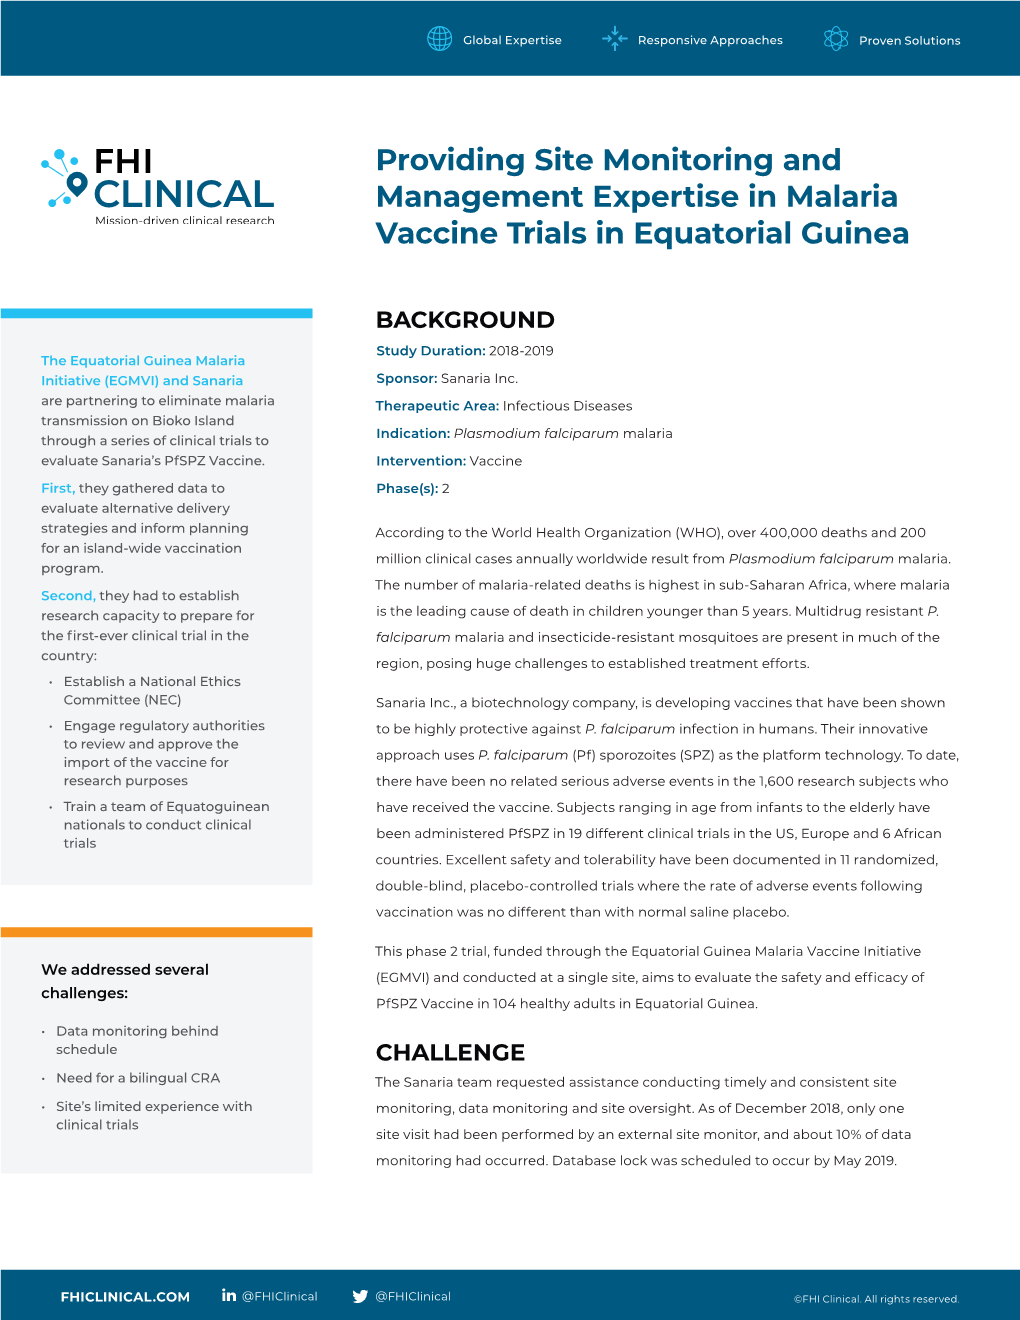 Providing Site Monitoring and Management Expertise in Malaria Vaccine Trials in Equatorial Guinea